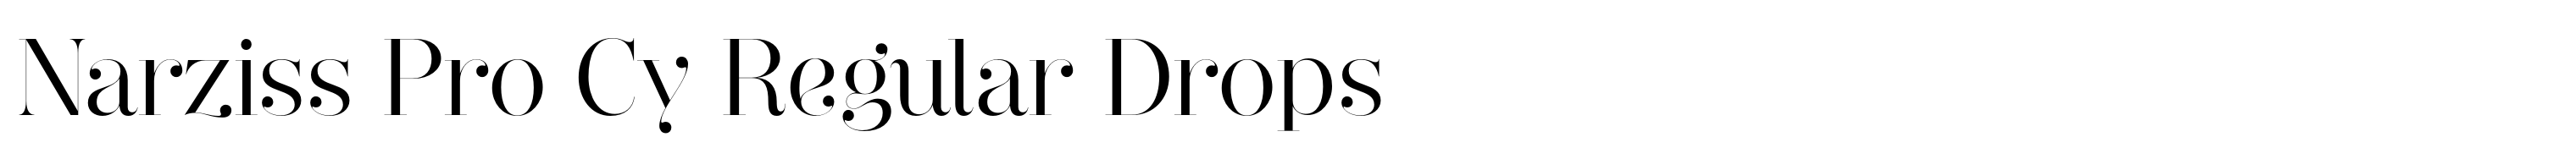 Narziss Pro Cy Regular Drops